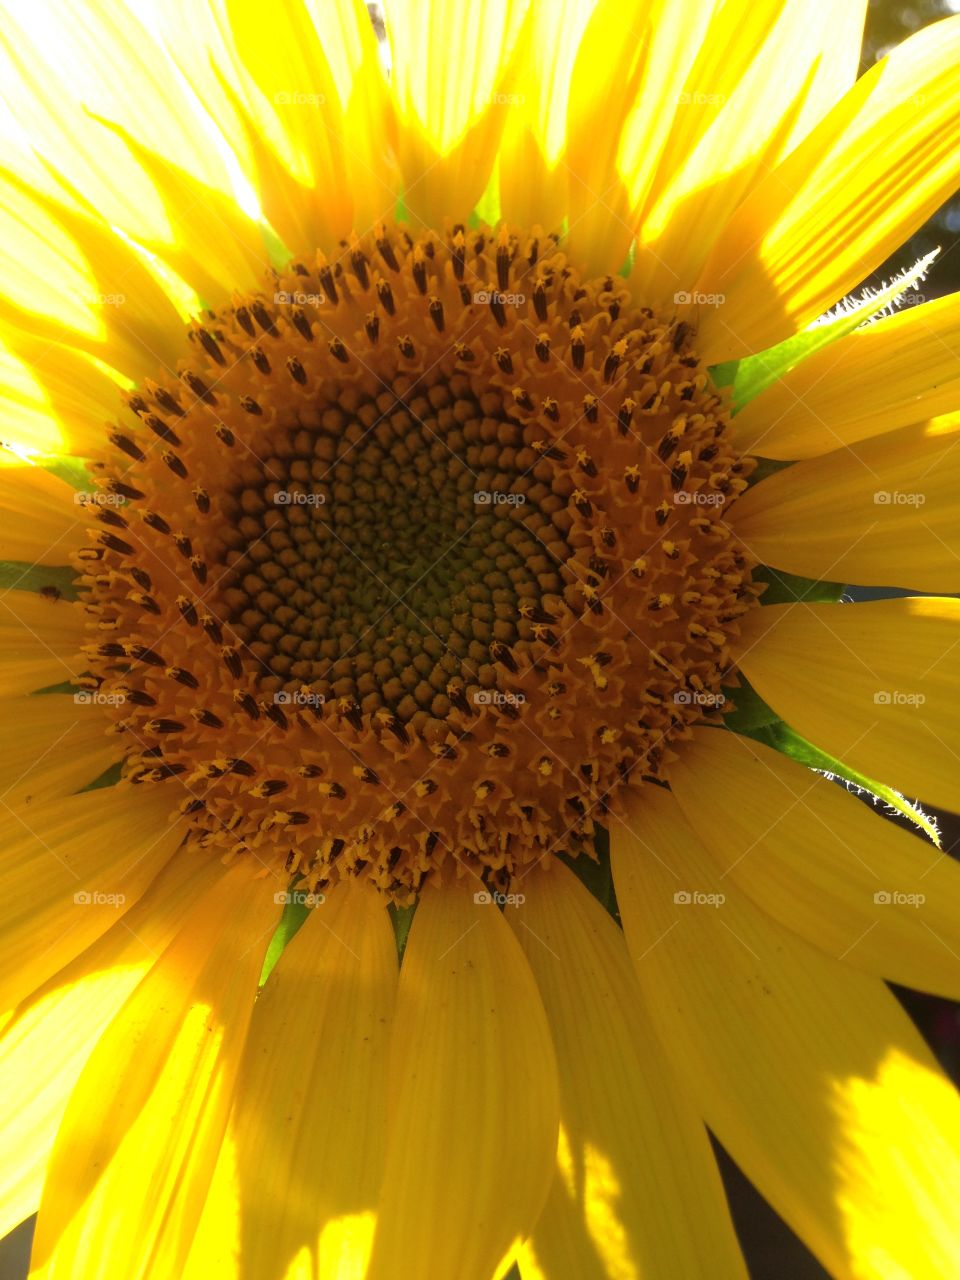 Sunflower at sunset